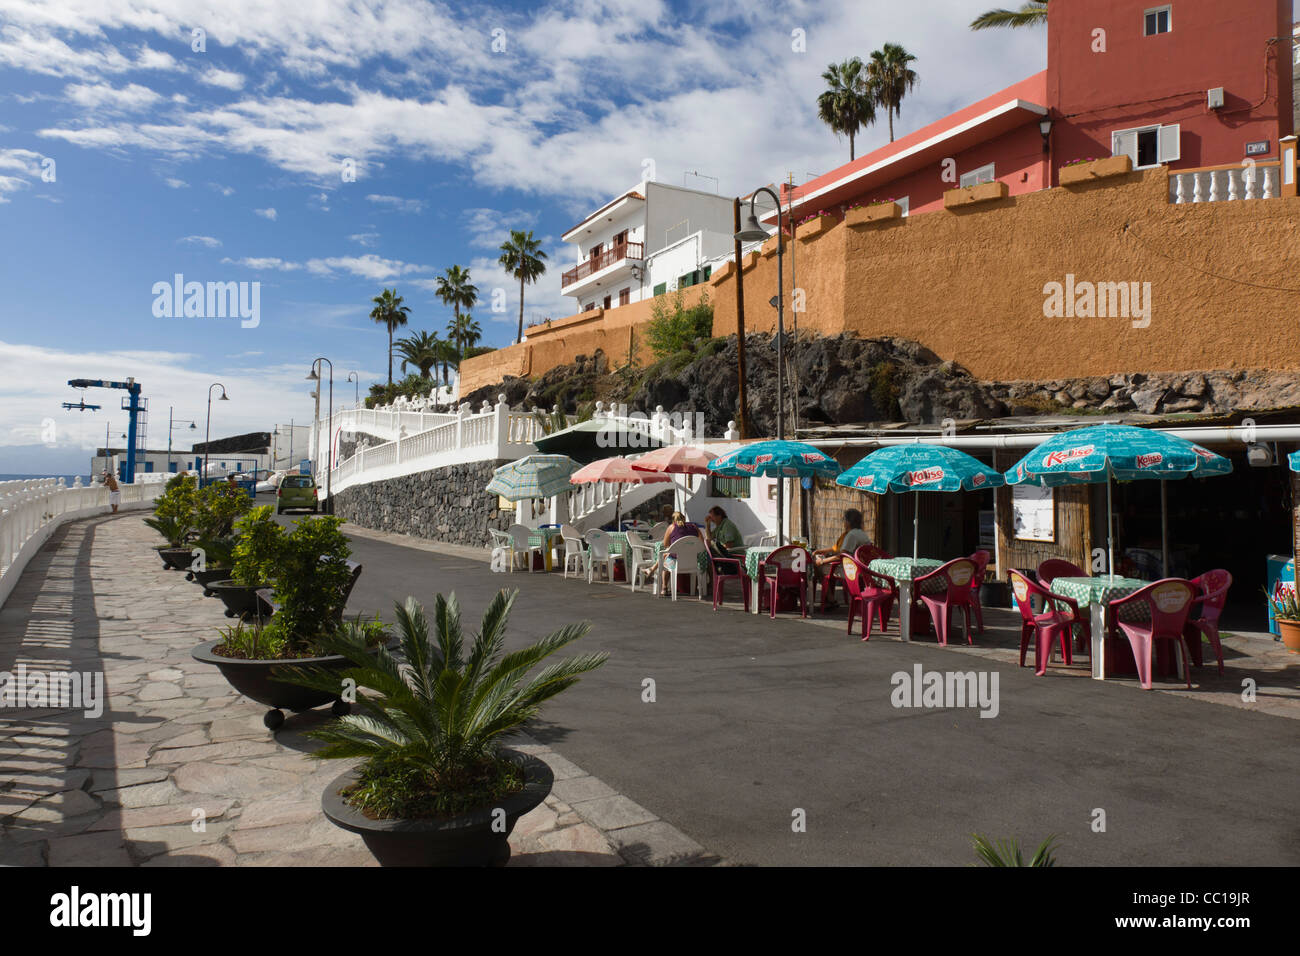 Puerto de Santiago, Tenerife - harbour cafés. Stock Photo